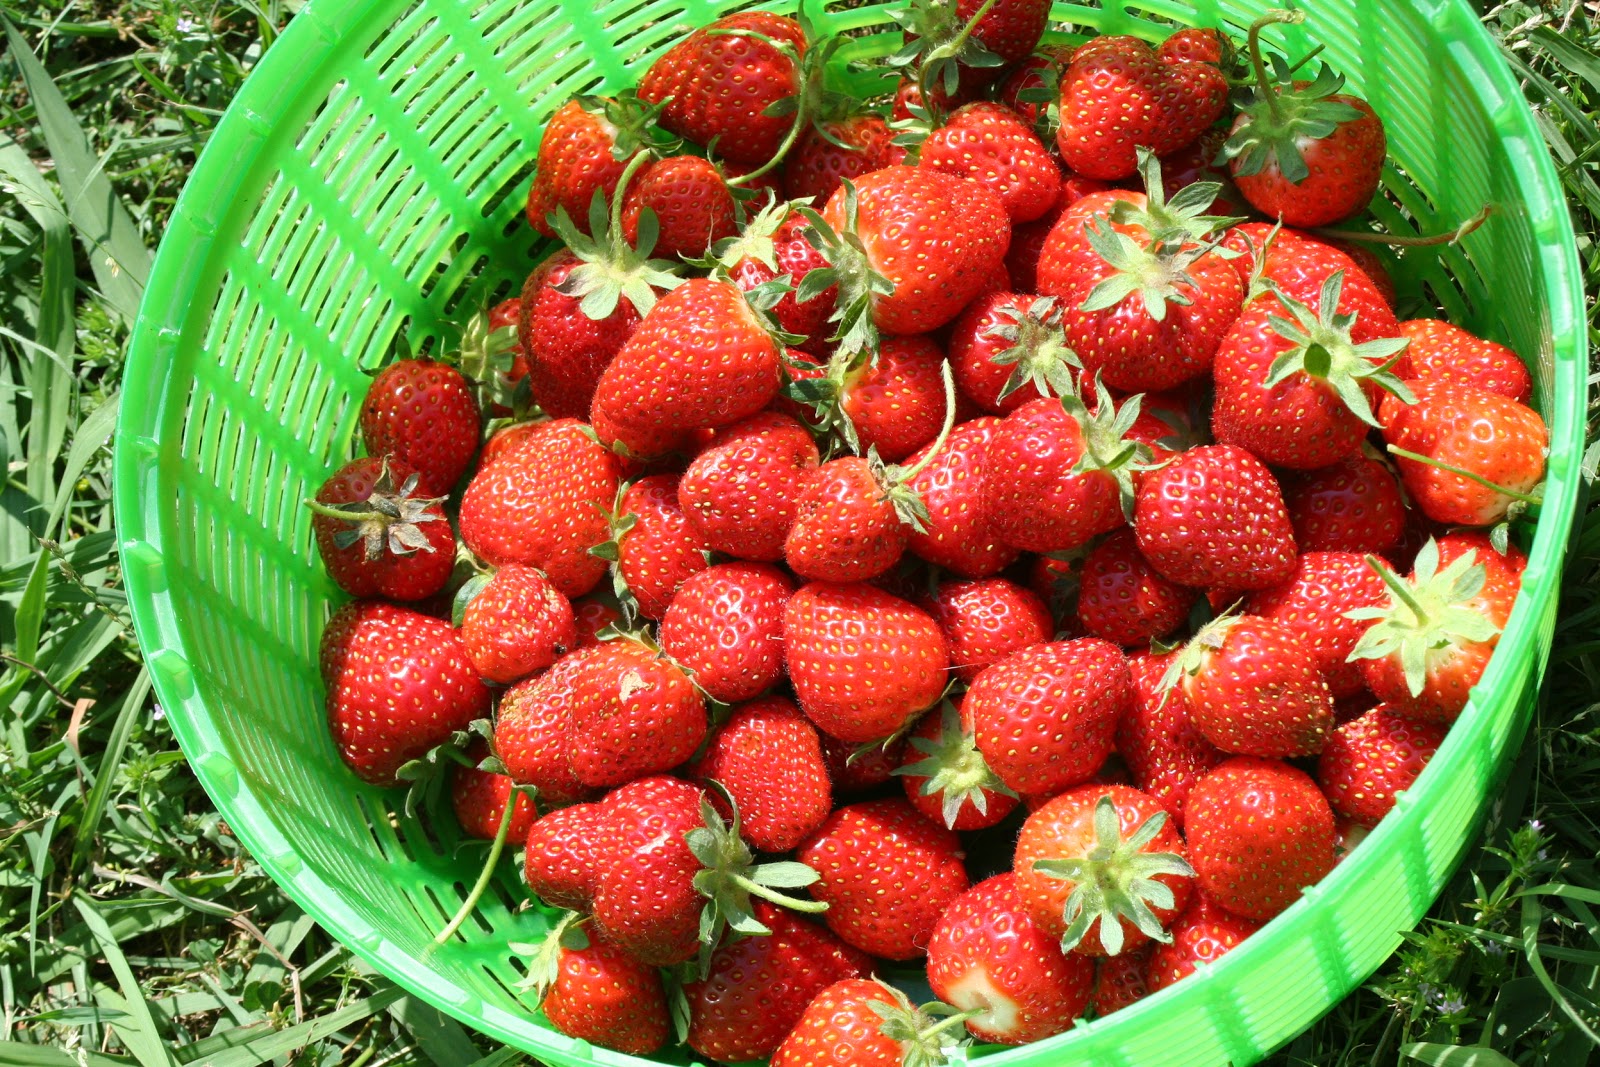 Brooding On: Life Cycle of the Backyard Strawberry